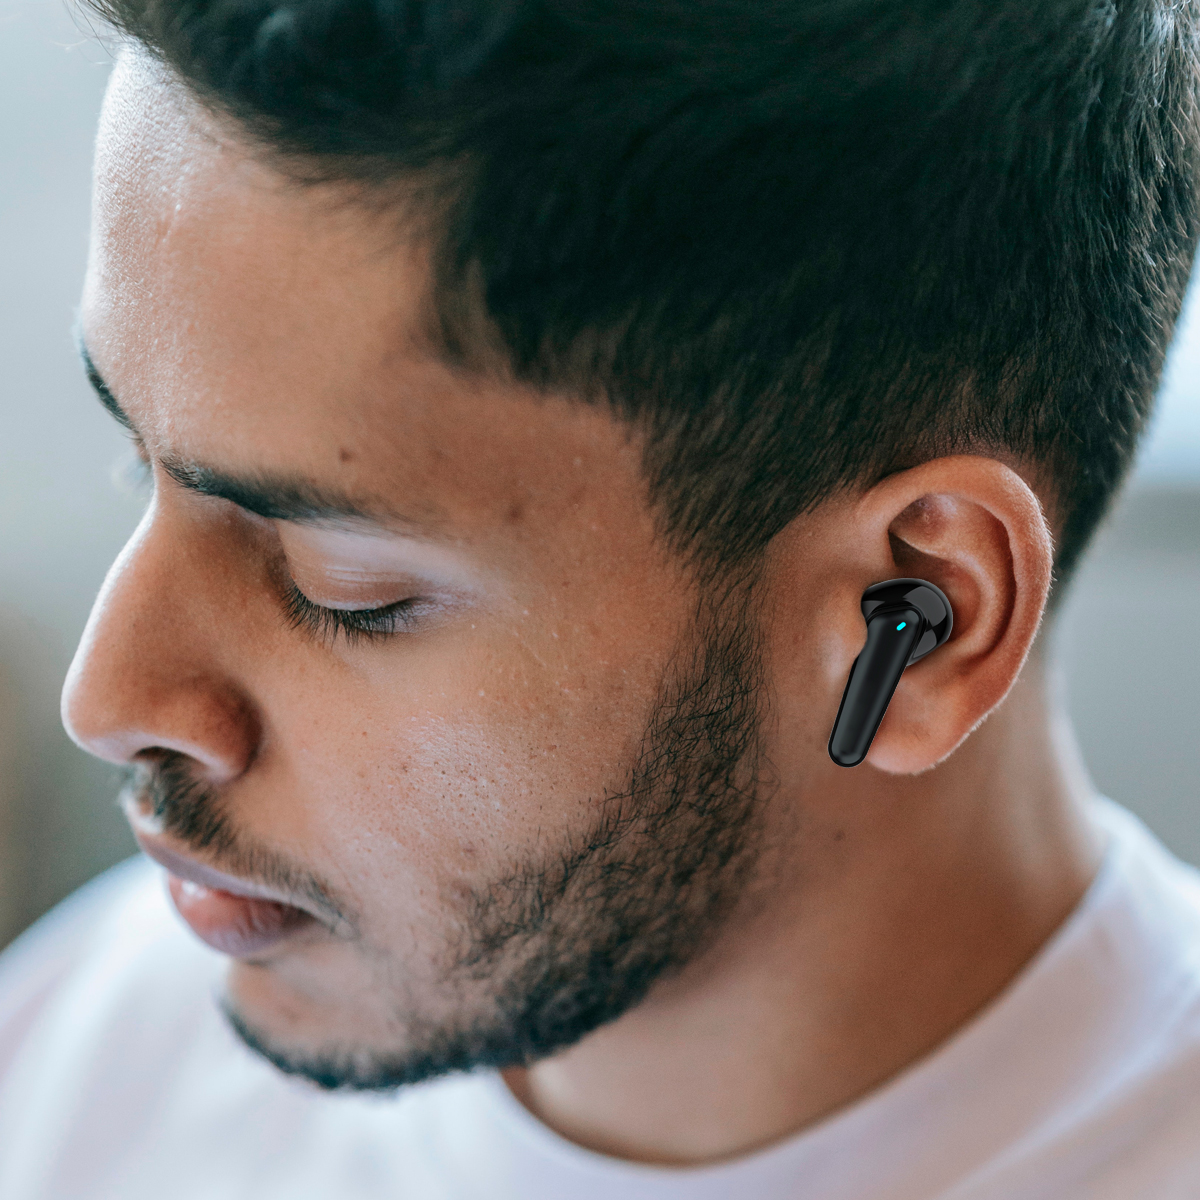 PRIXTON Earbuds Bluetooth TWS158, In-ear Schwarz